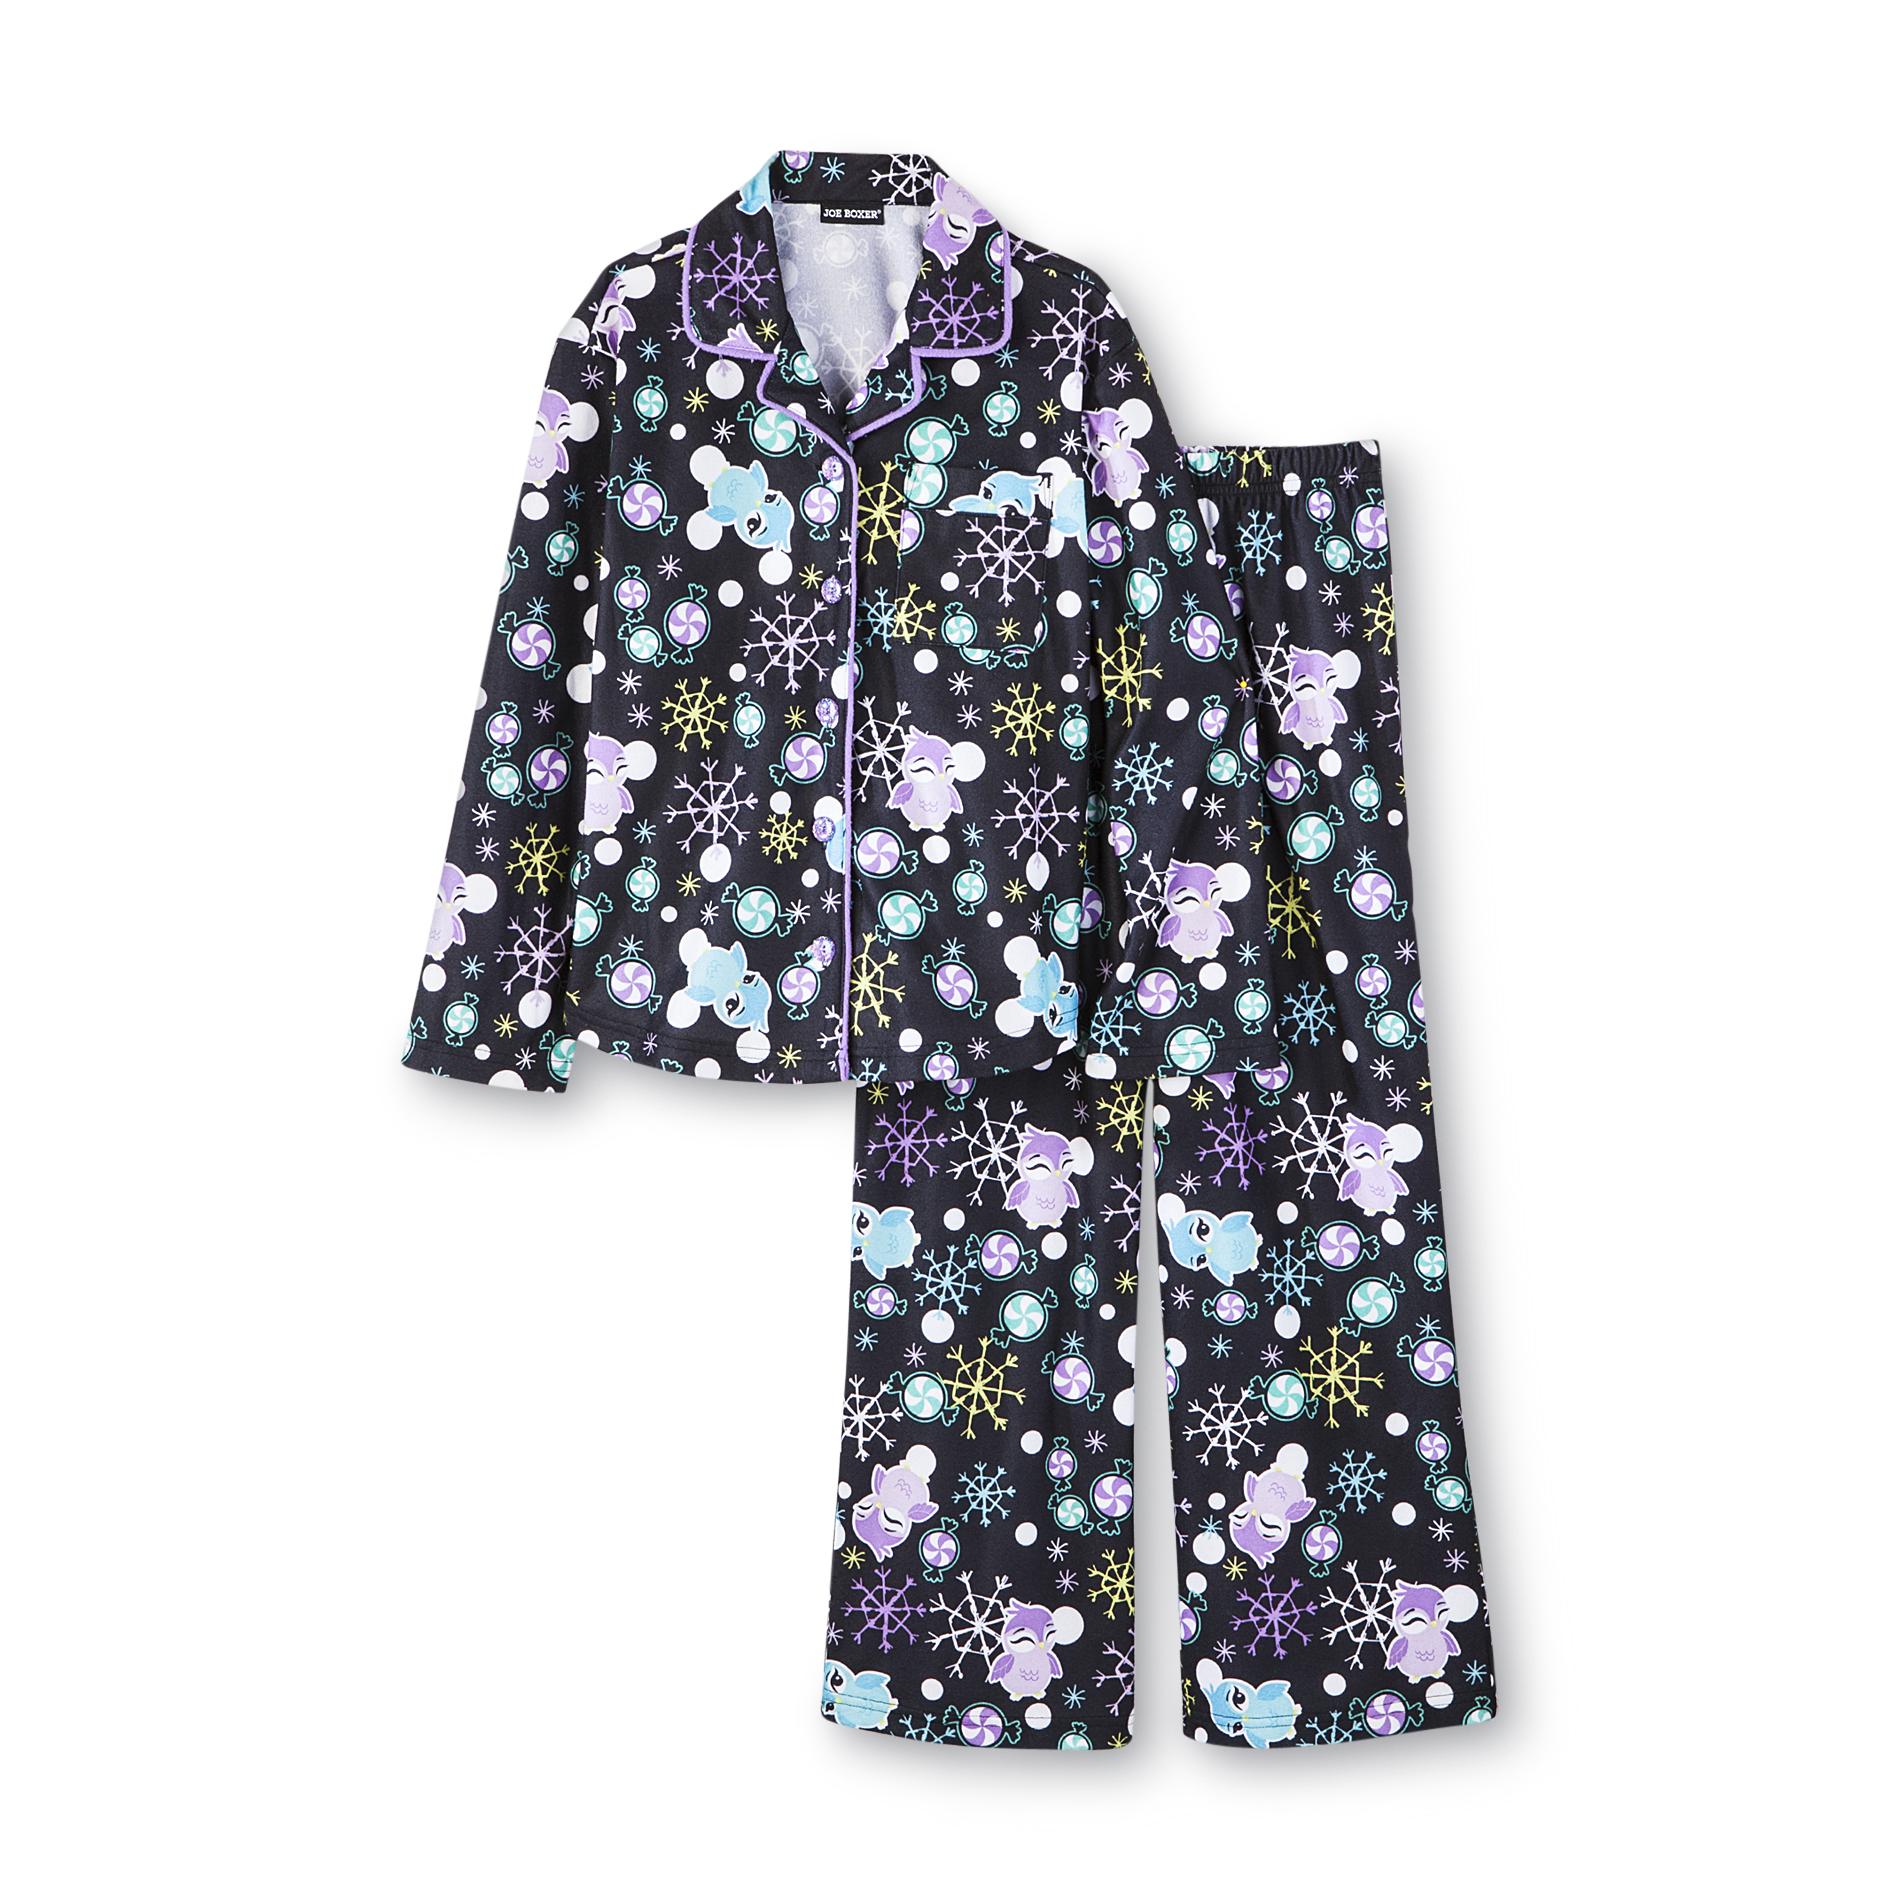 Joe Boxer Girl's Flannel Pajamas - Birds & Snowflakes